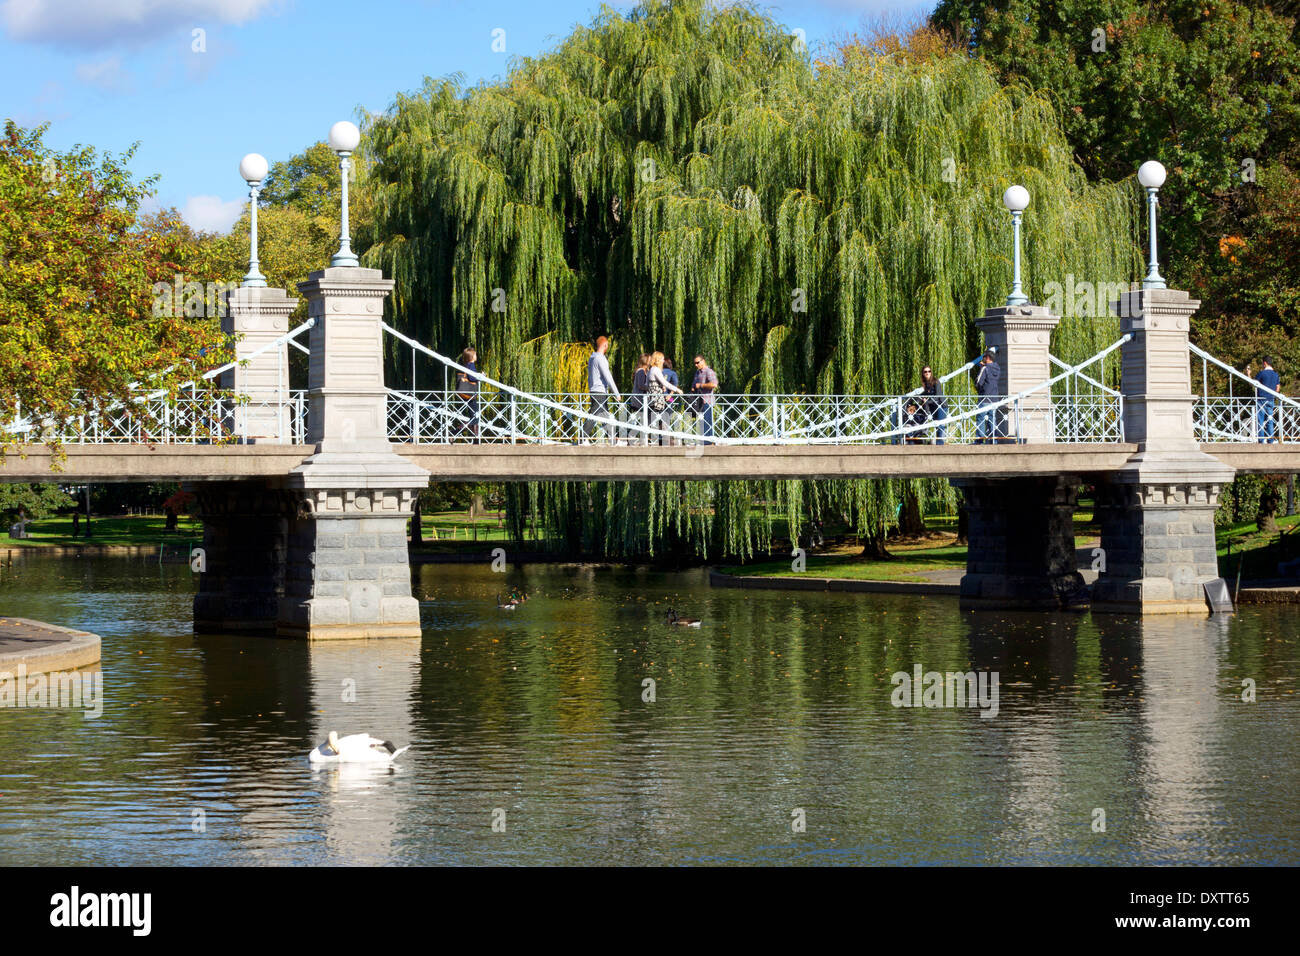 The bridge in Boston Common Park, Boston, Massachusetts, USA Stock Photo